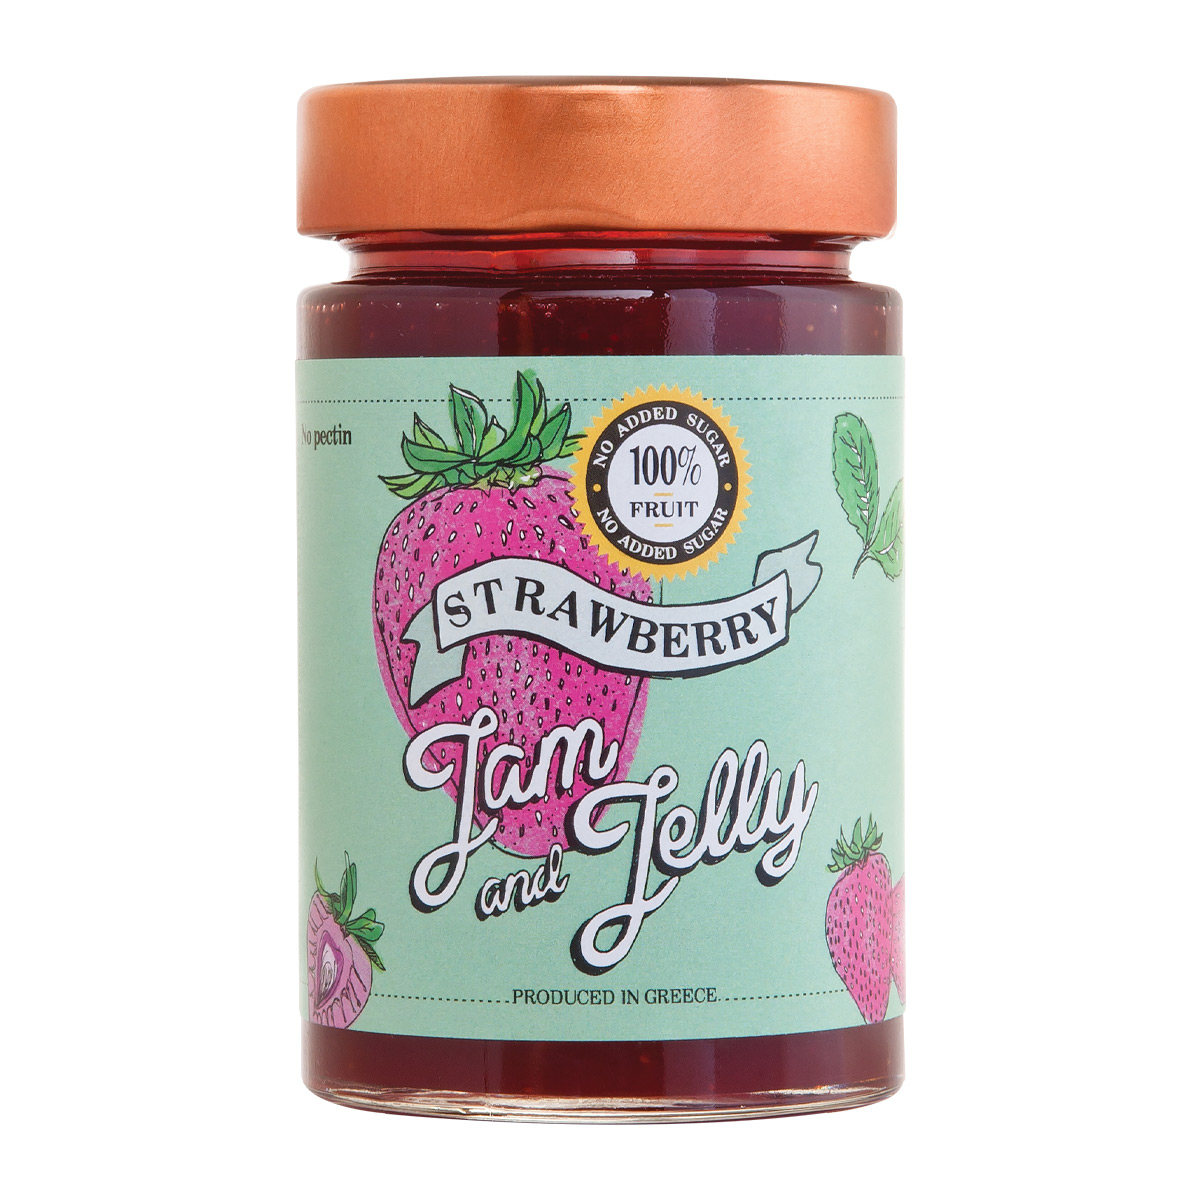 Jelly jam. Джем клубничный без сахара. Jelly togella фото. Wholesale Jams and Jellies Arkansas. To spread with Strawberry Jam.